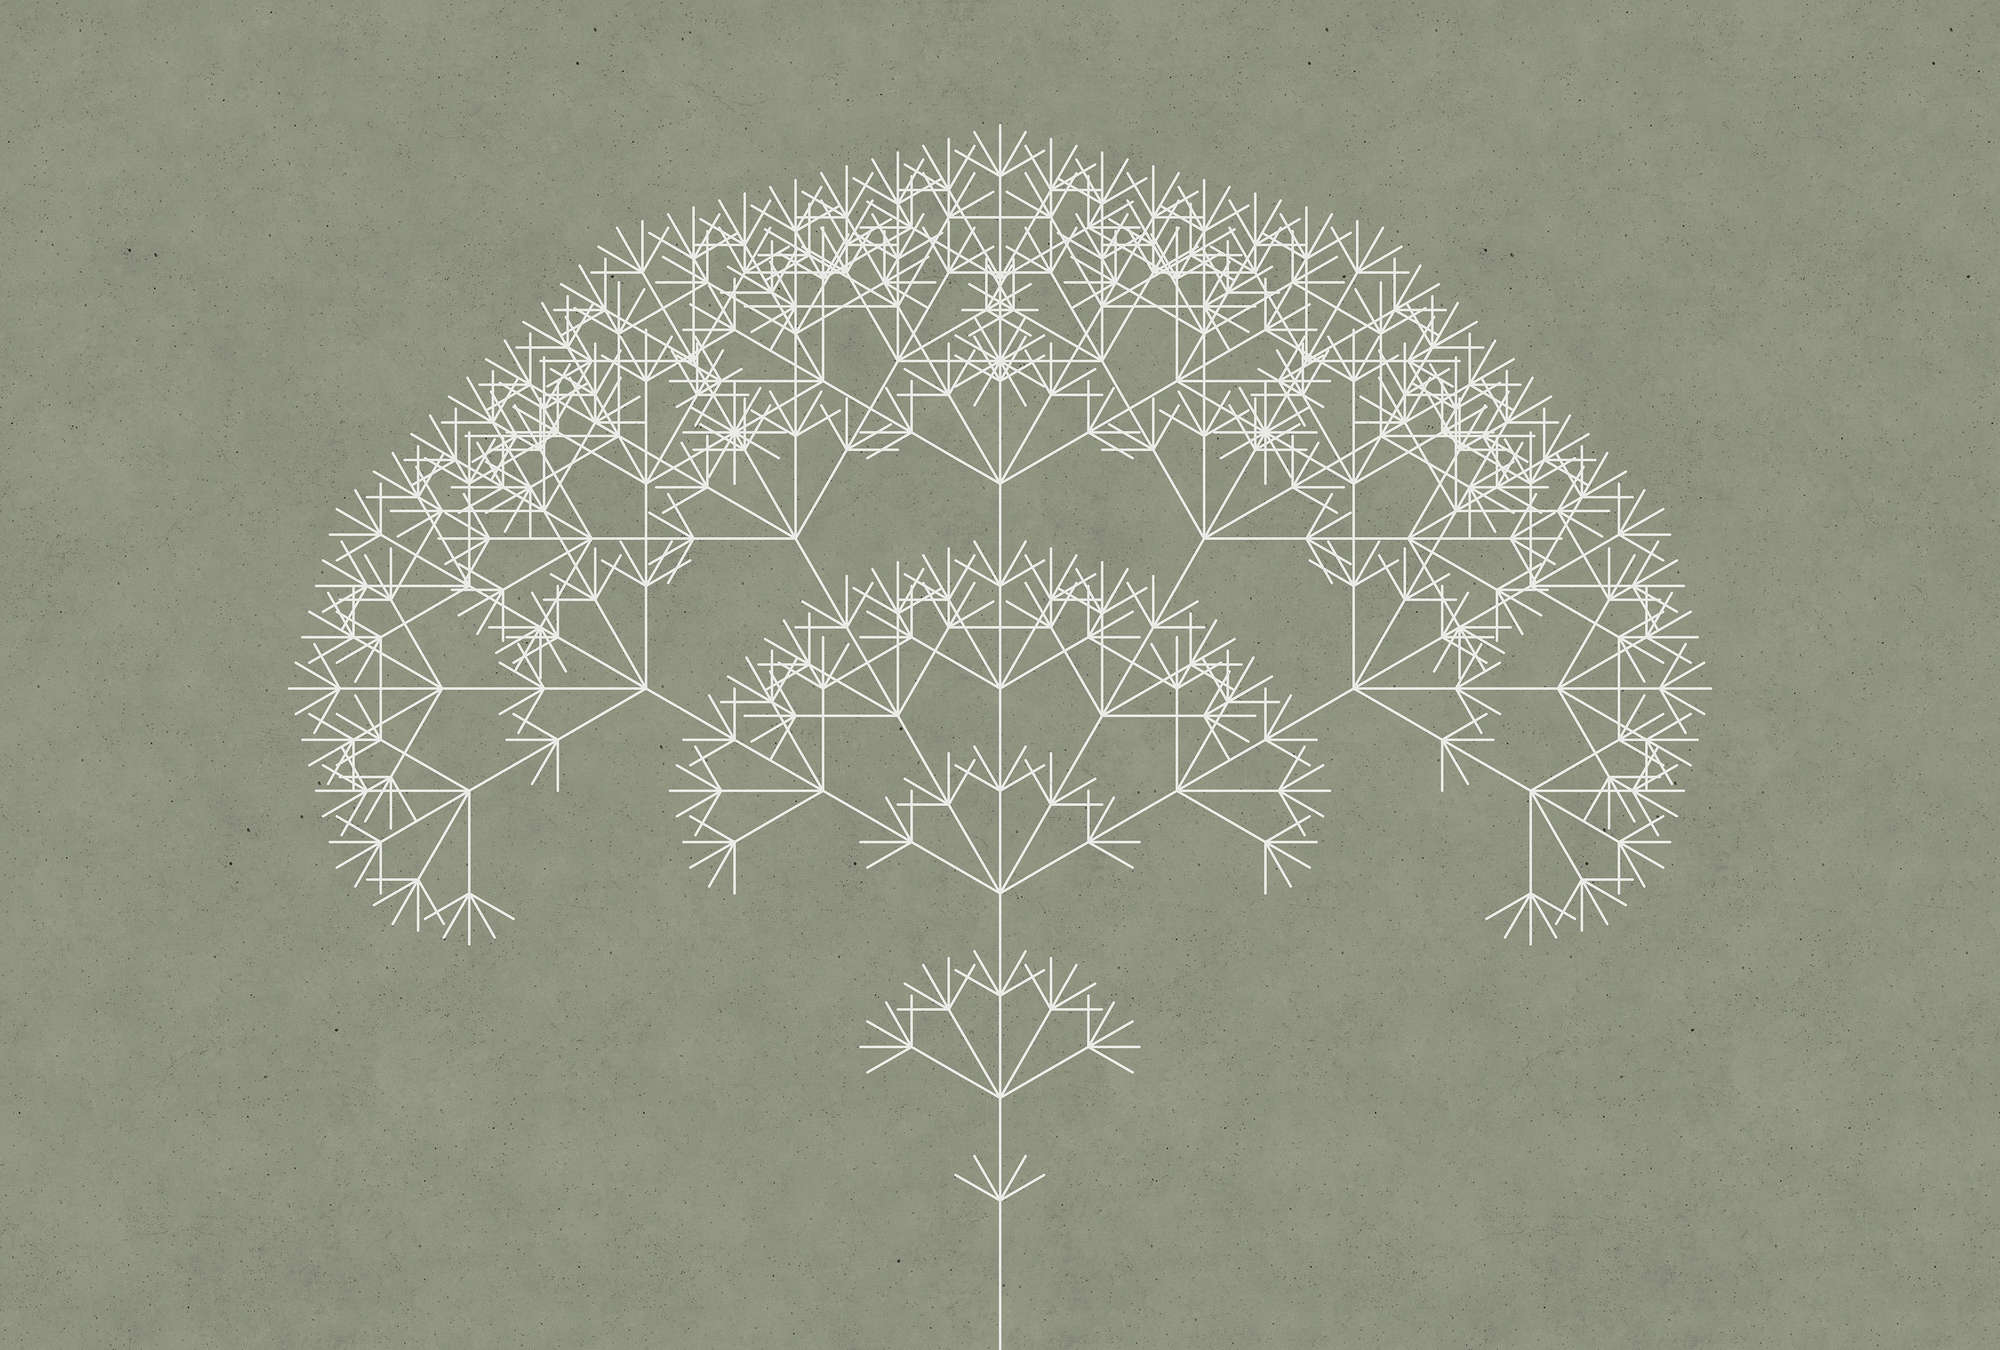             Dandelion Tree Behang - Groen, Wit
        